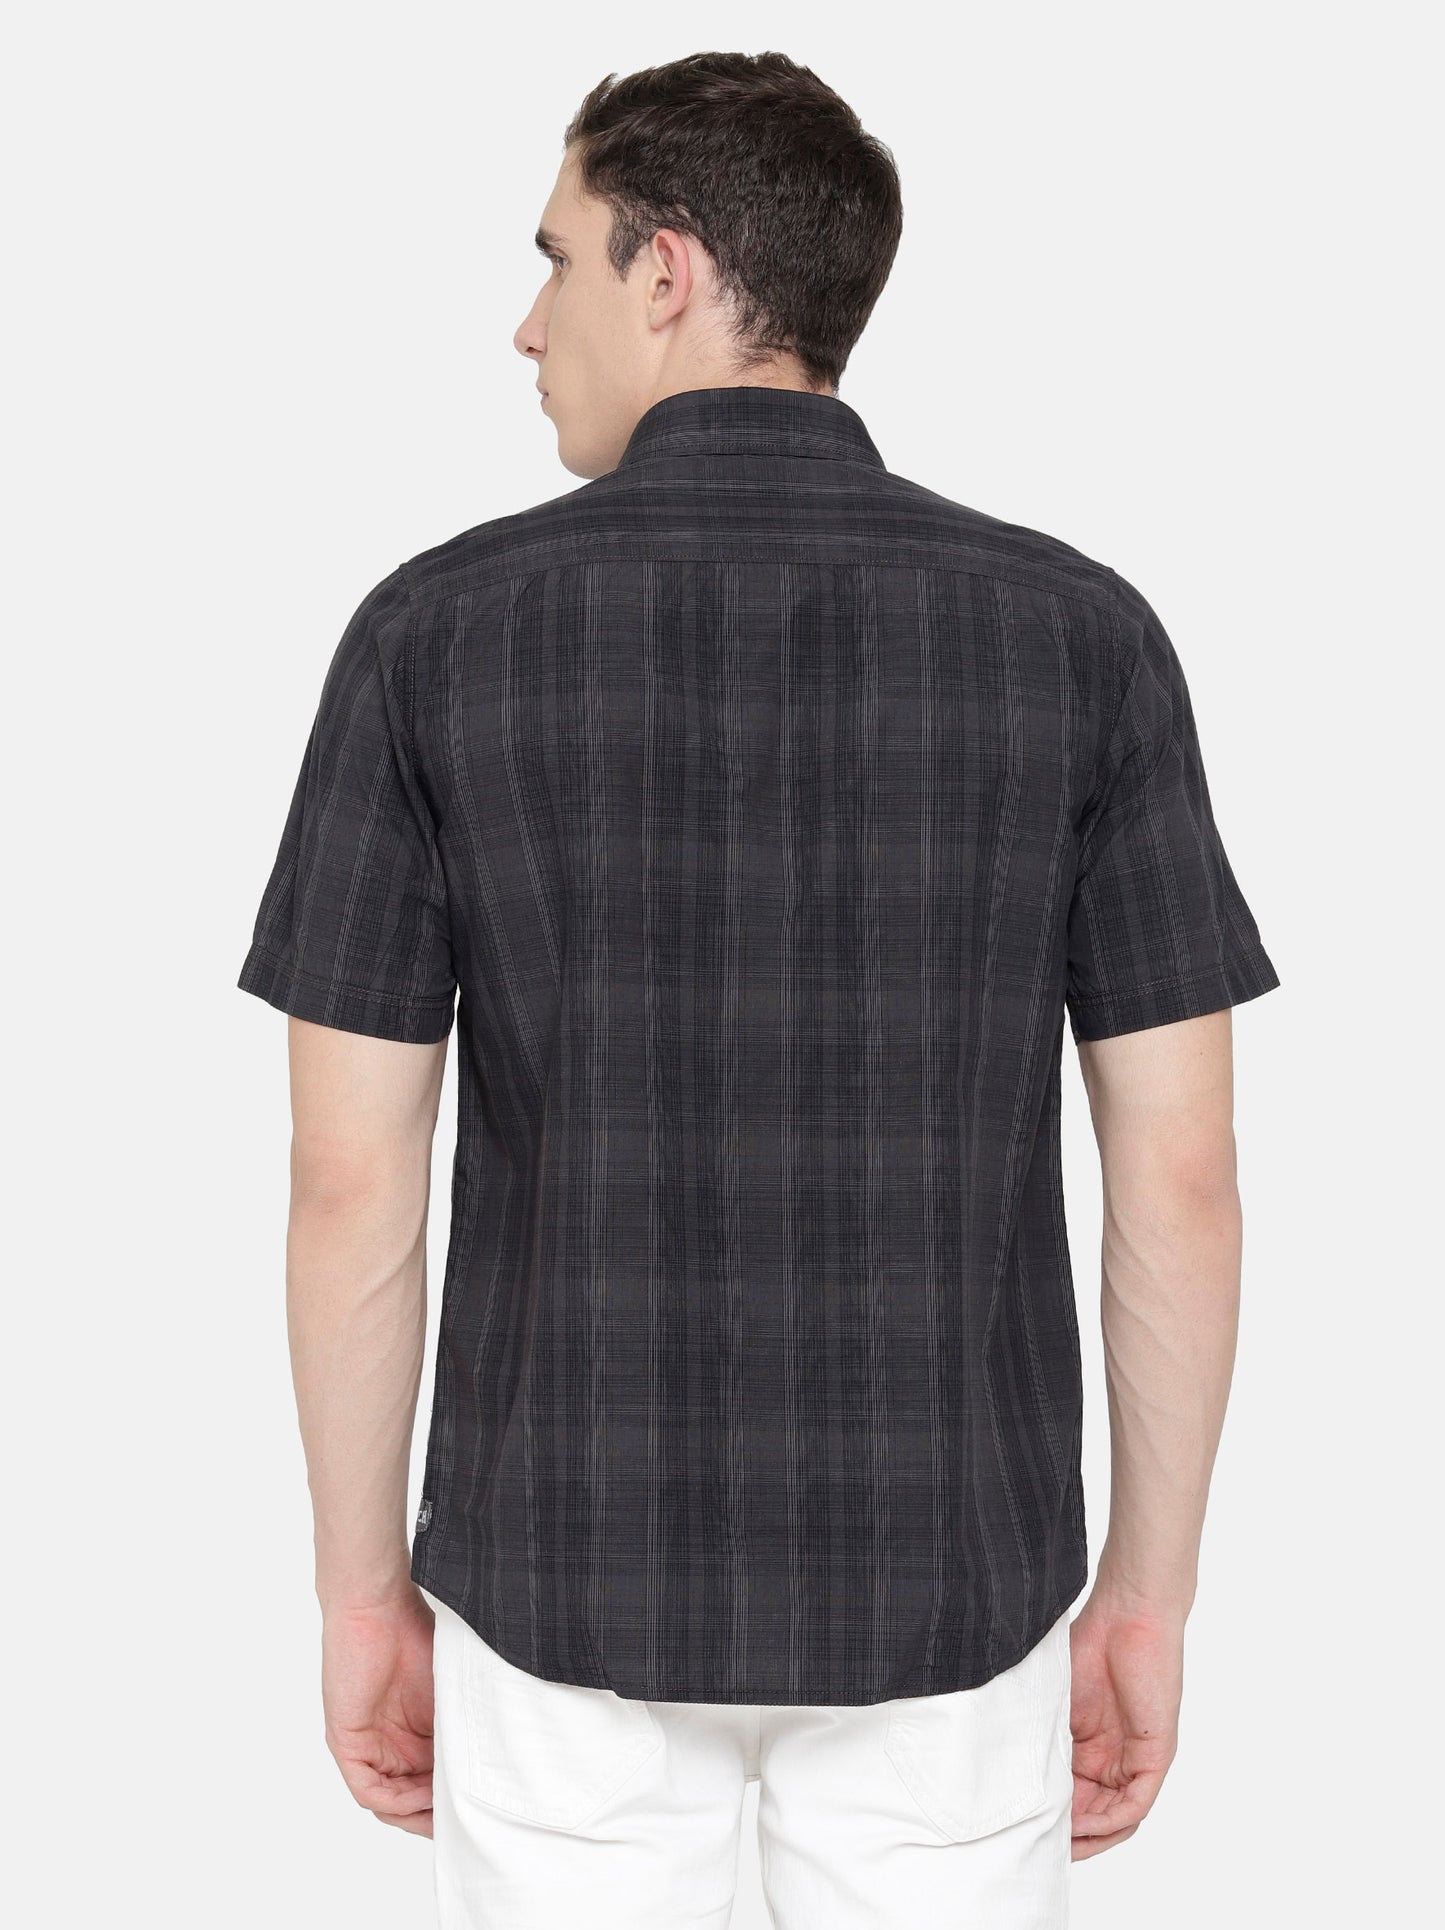 Charcoal Grey Checkered Shirt -Short Sleeve